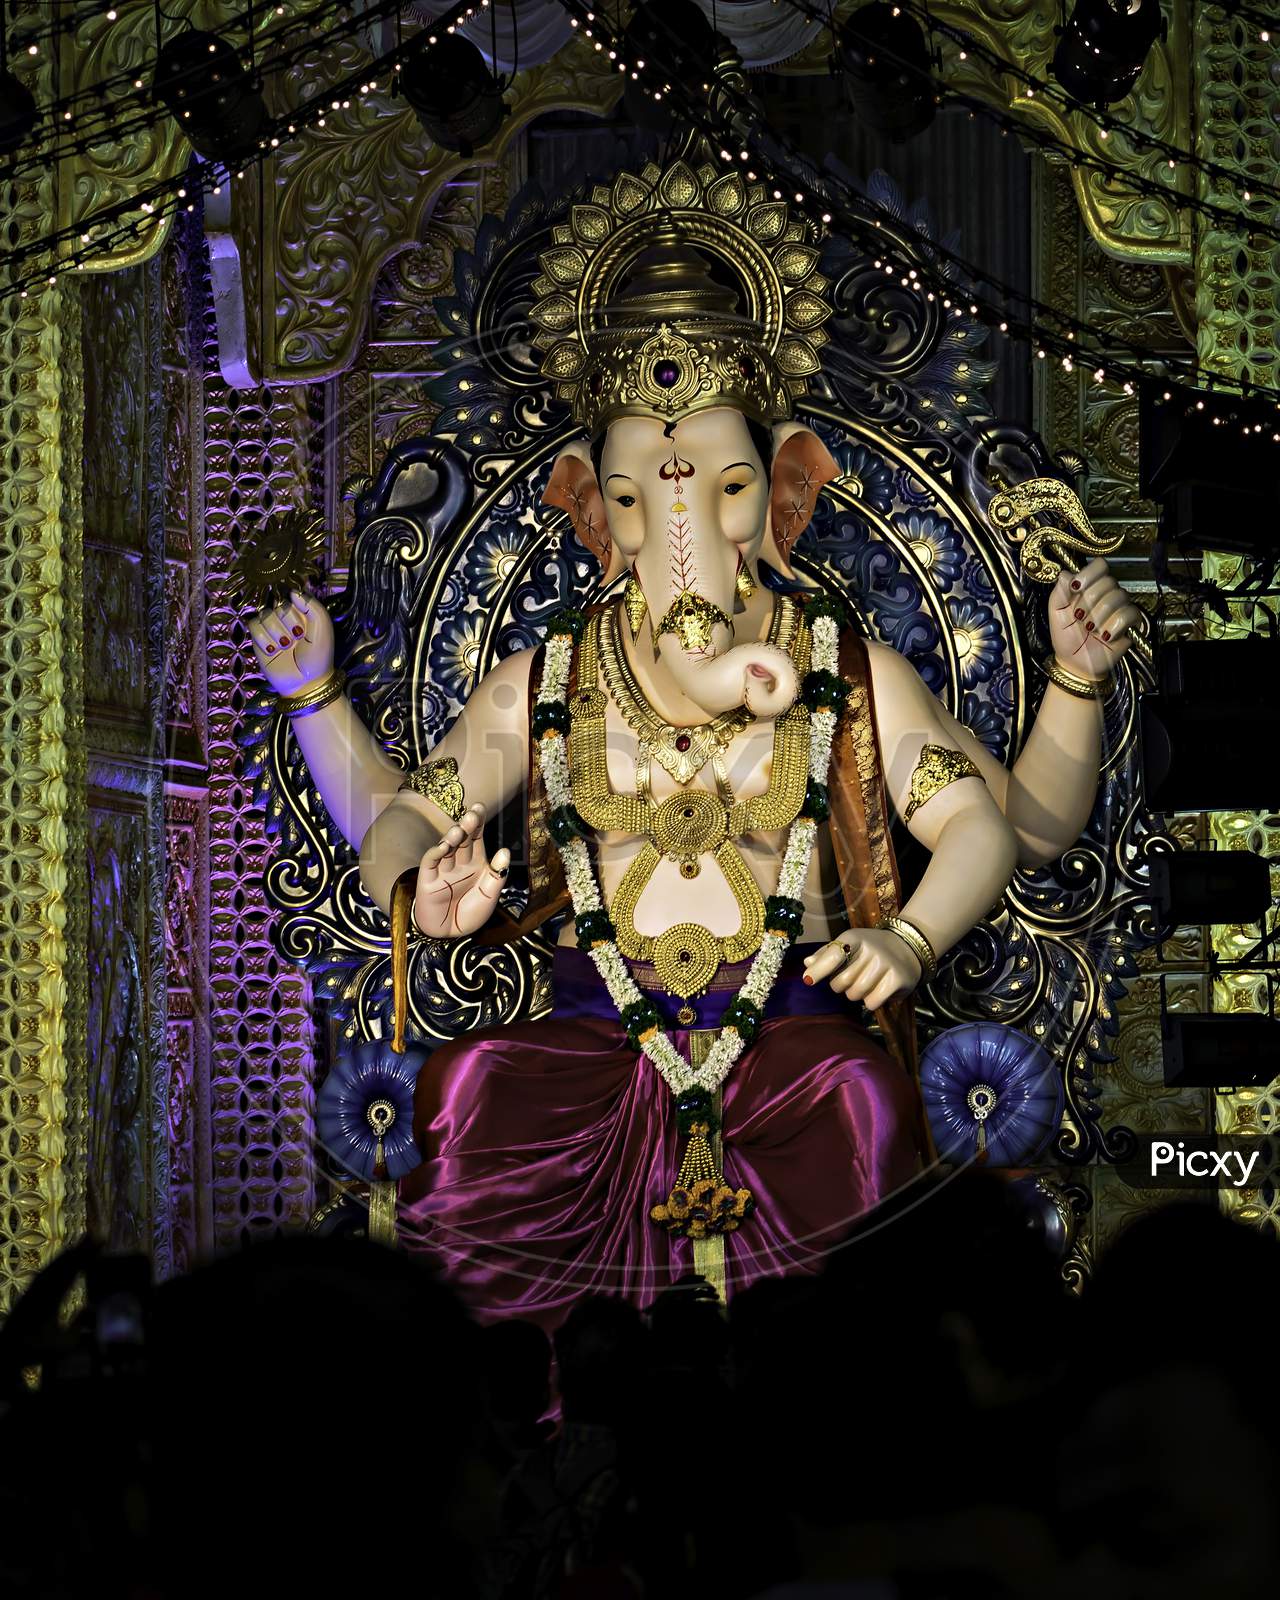 Closeup, Portrait View Of Decorated And Garlanded Idol Of Hindu God Ganesha.